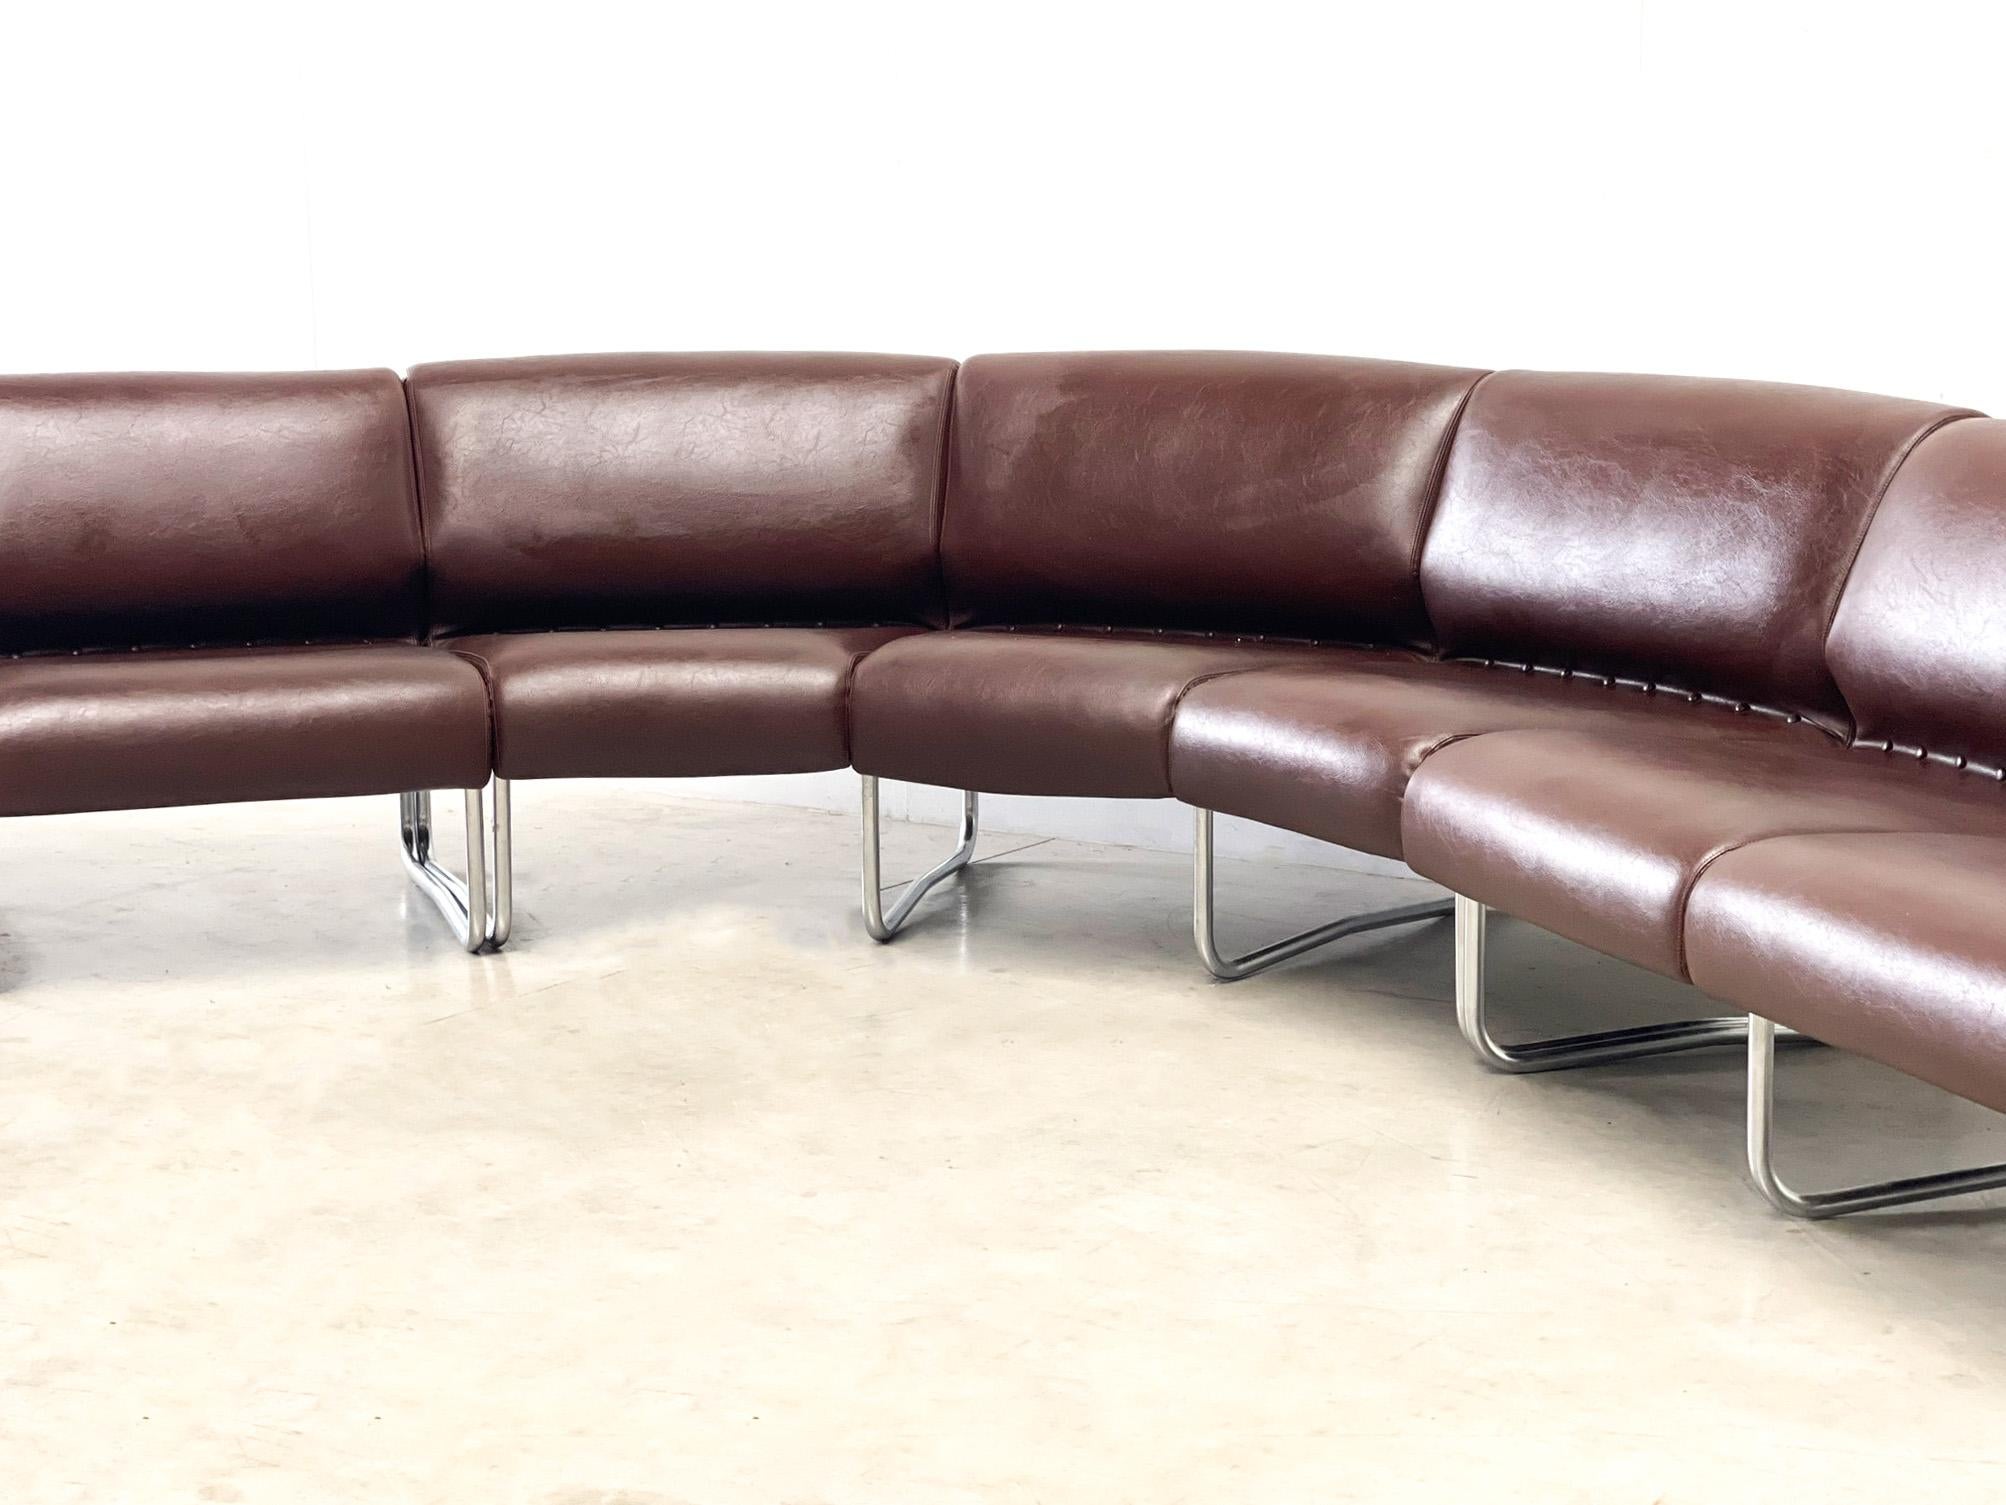 Late 20th Century Brown leather tubular modular sofa